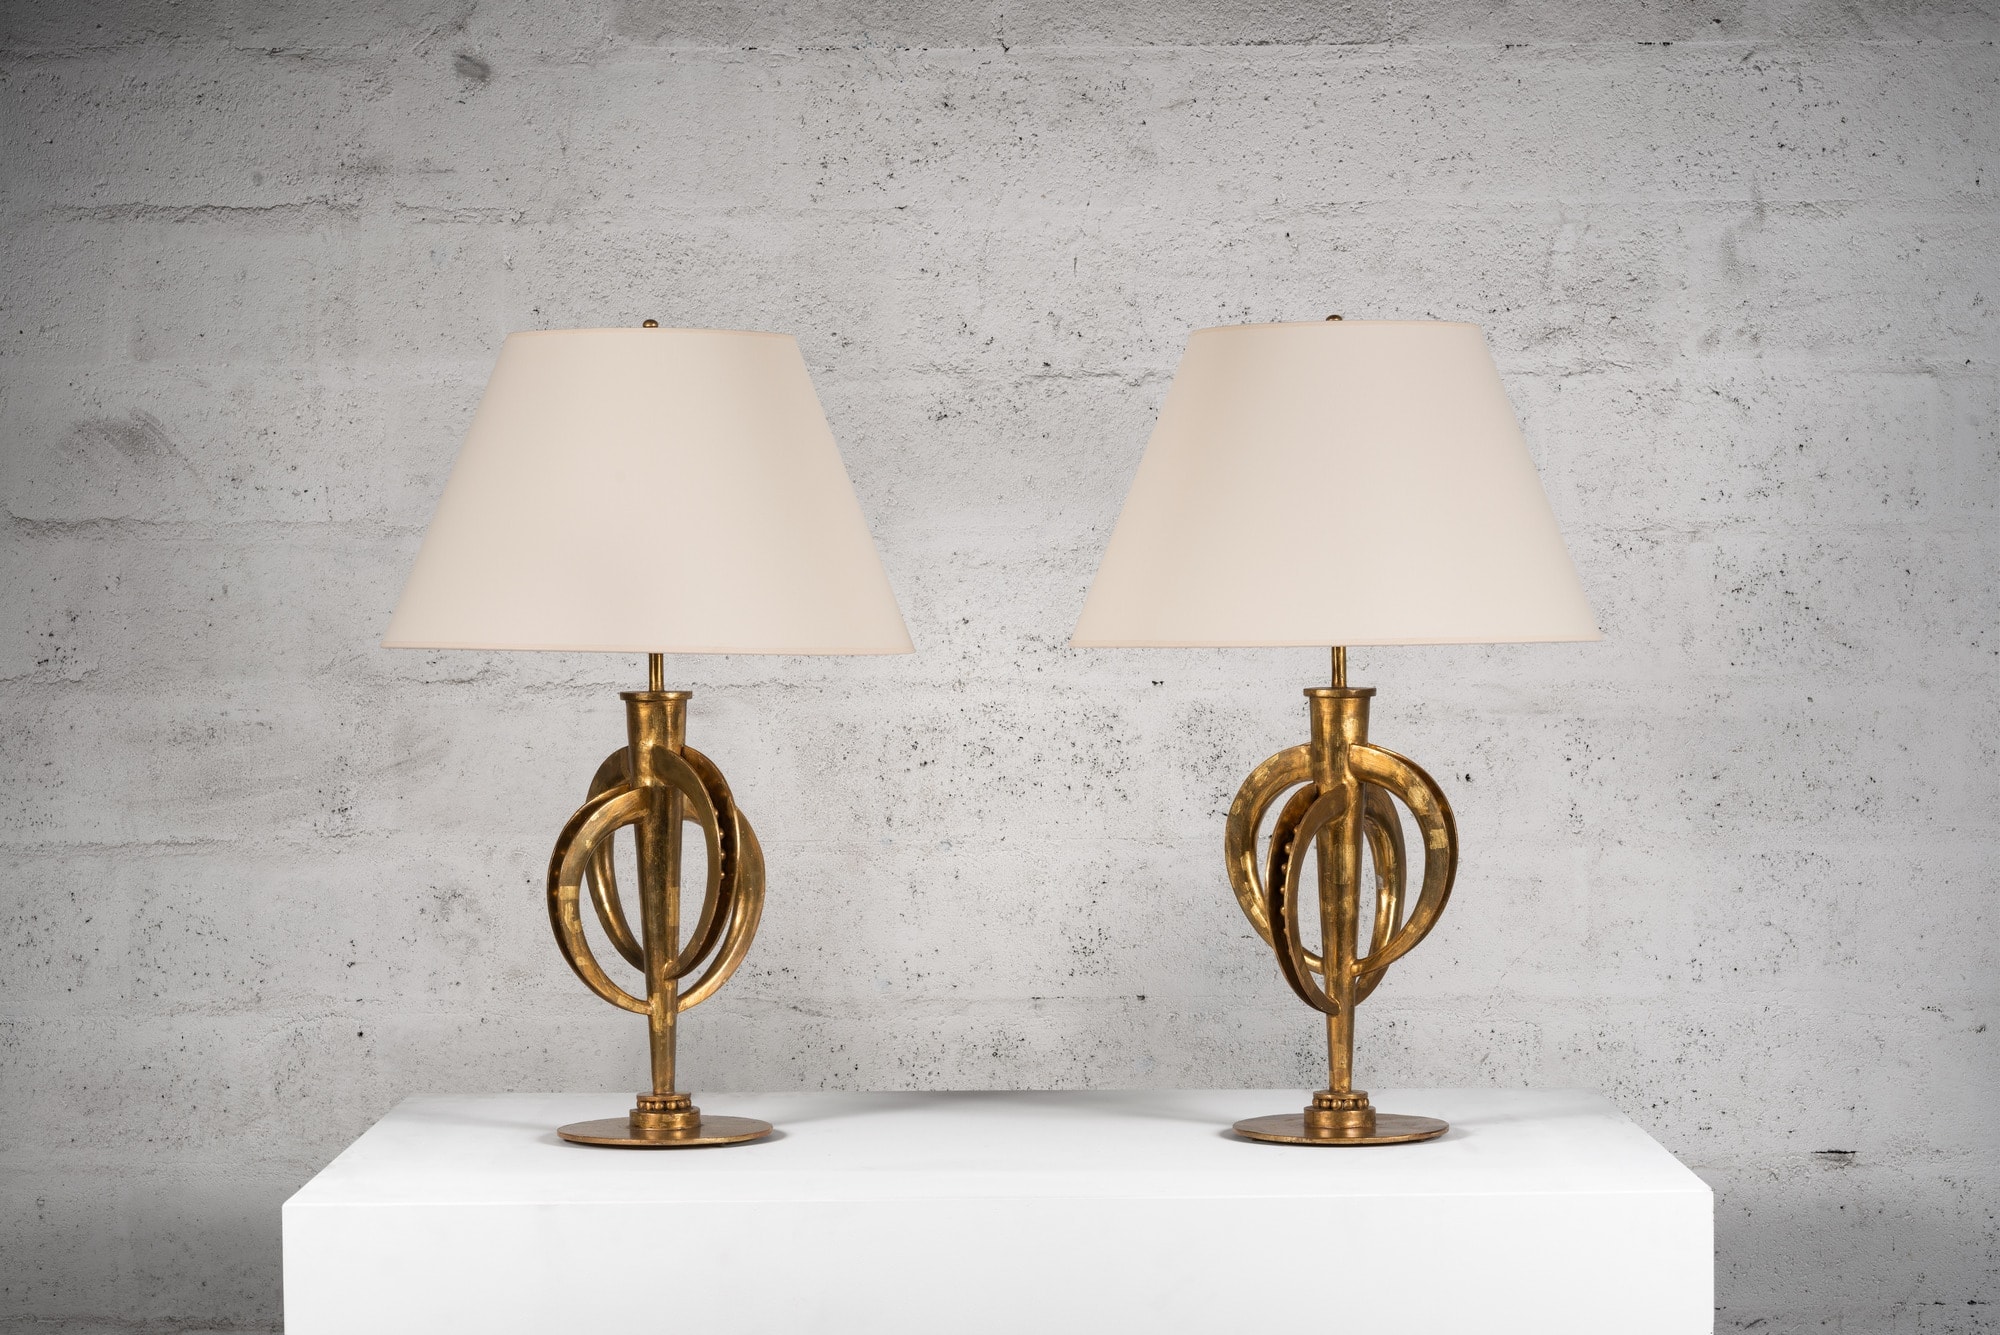 Marc Nicolas Du Plantier, Exceptional pair of lamps (sold), vue 01